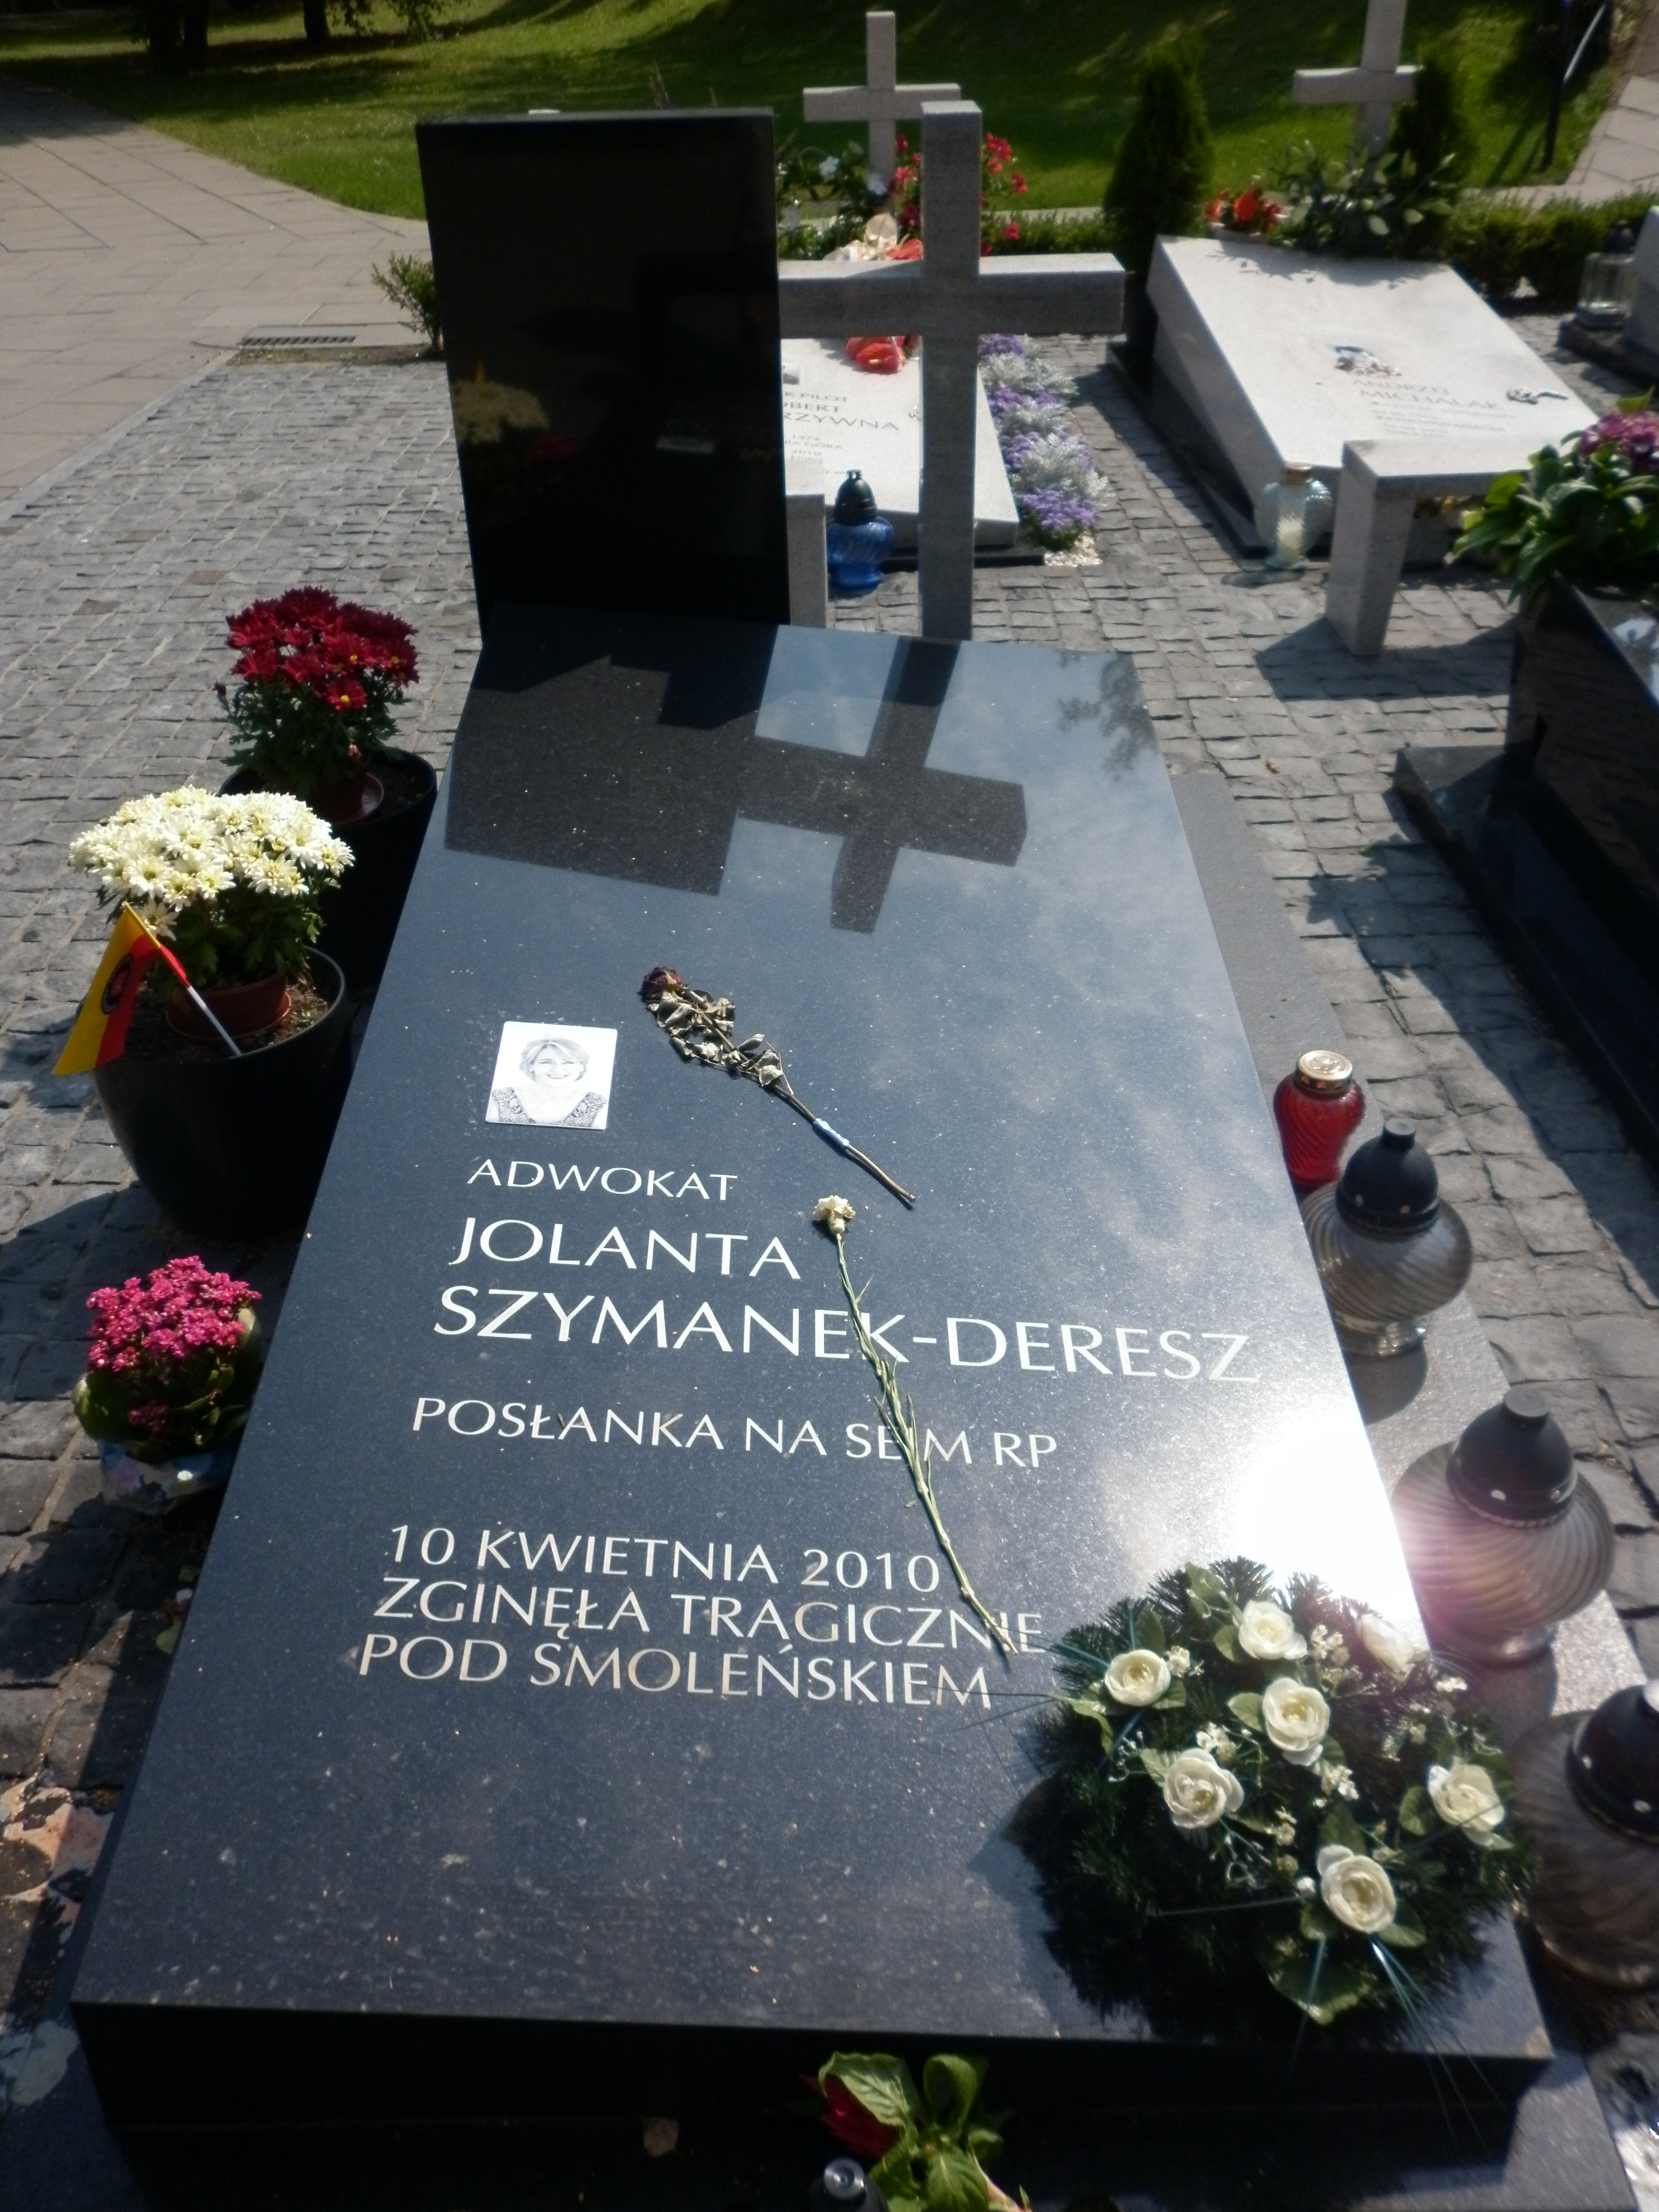 Wikipedia, 2010 deaths, Jolanta Szymanek-Deresz, Monument to victims of the 2010 Polish Air Force Tu